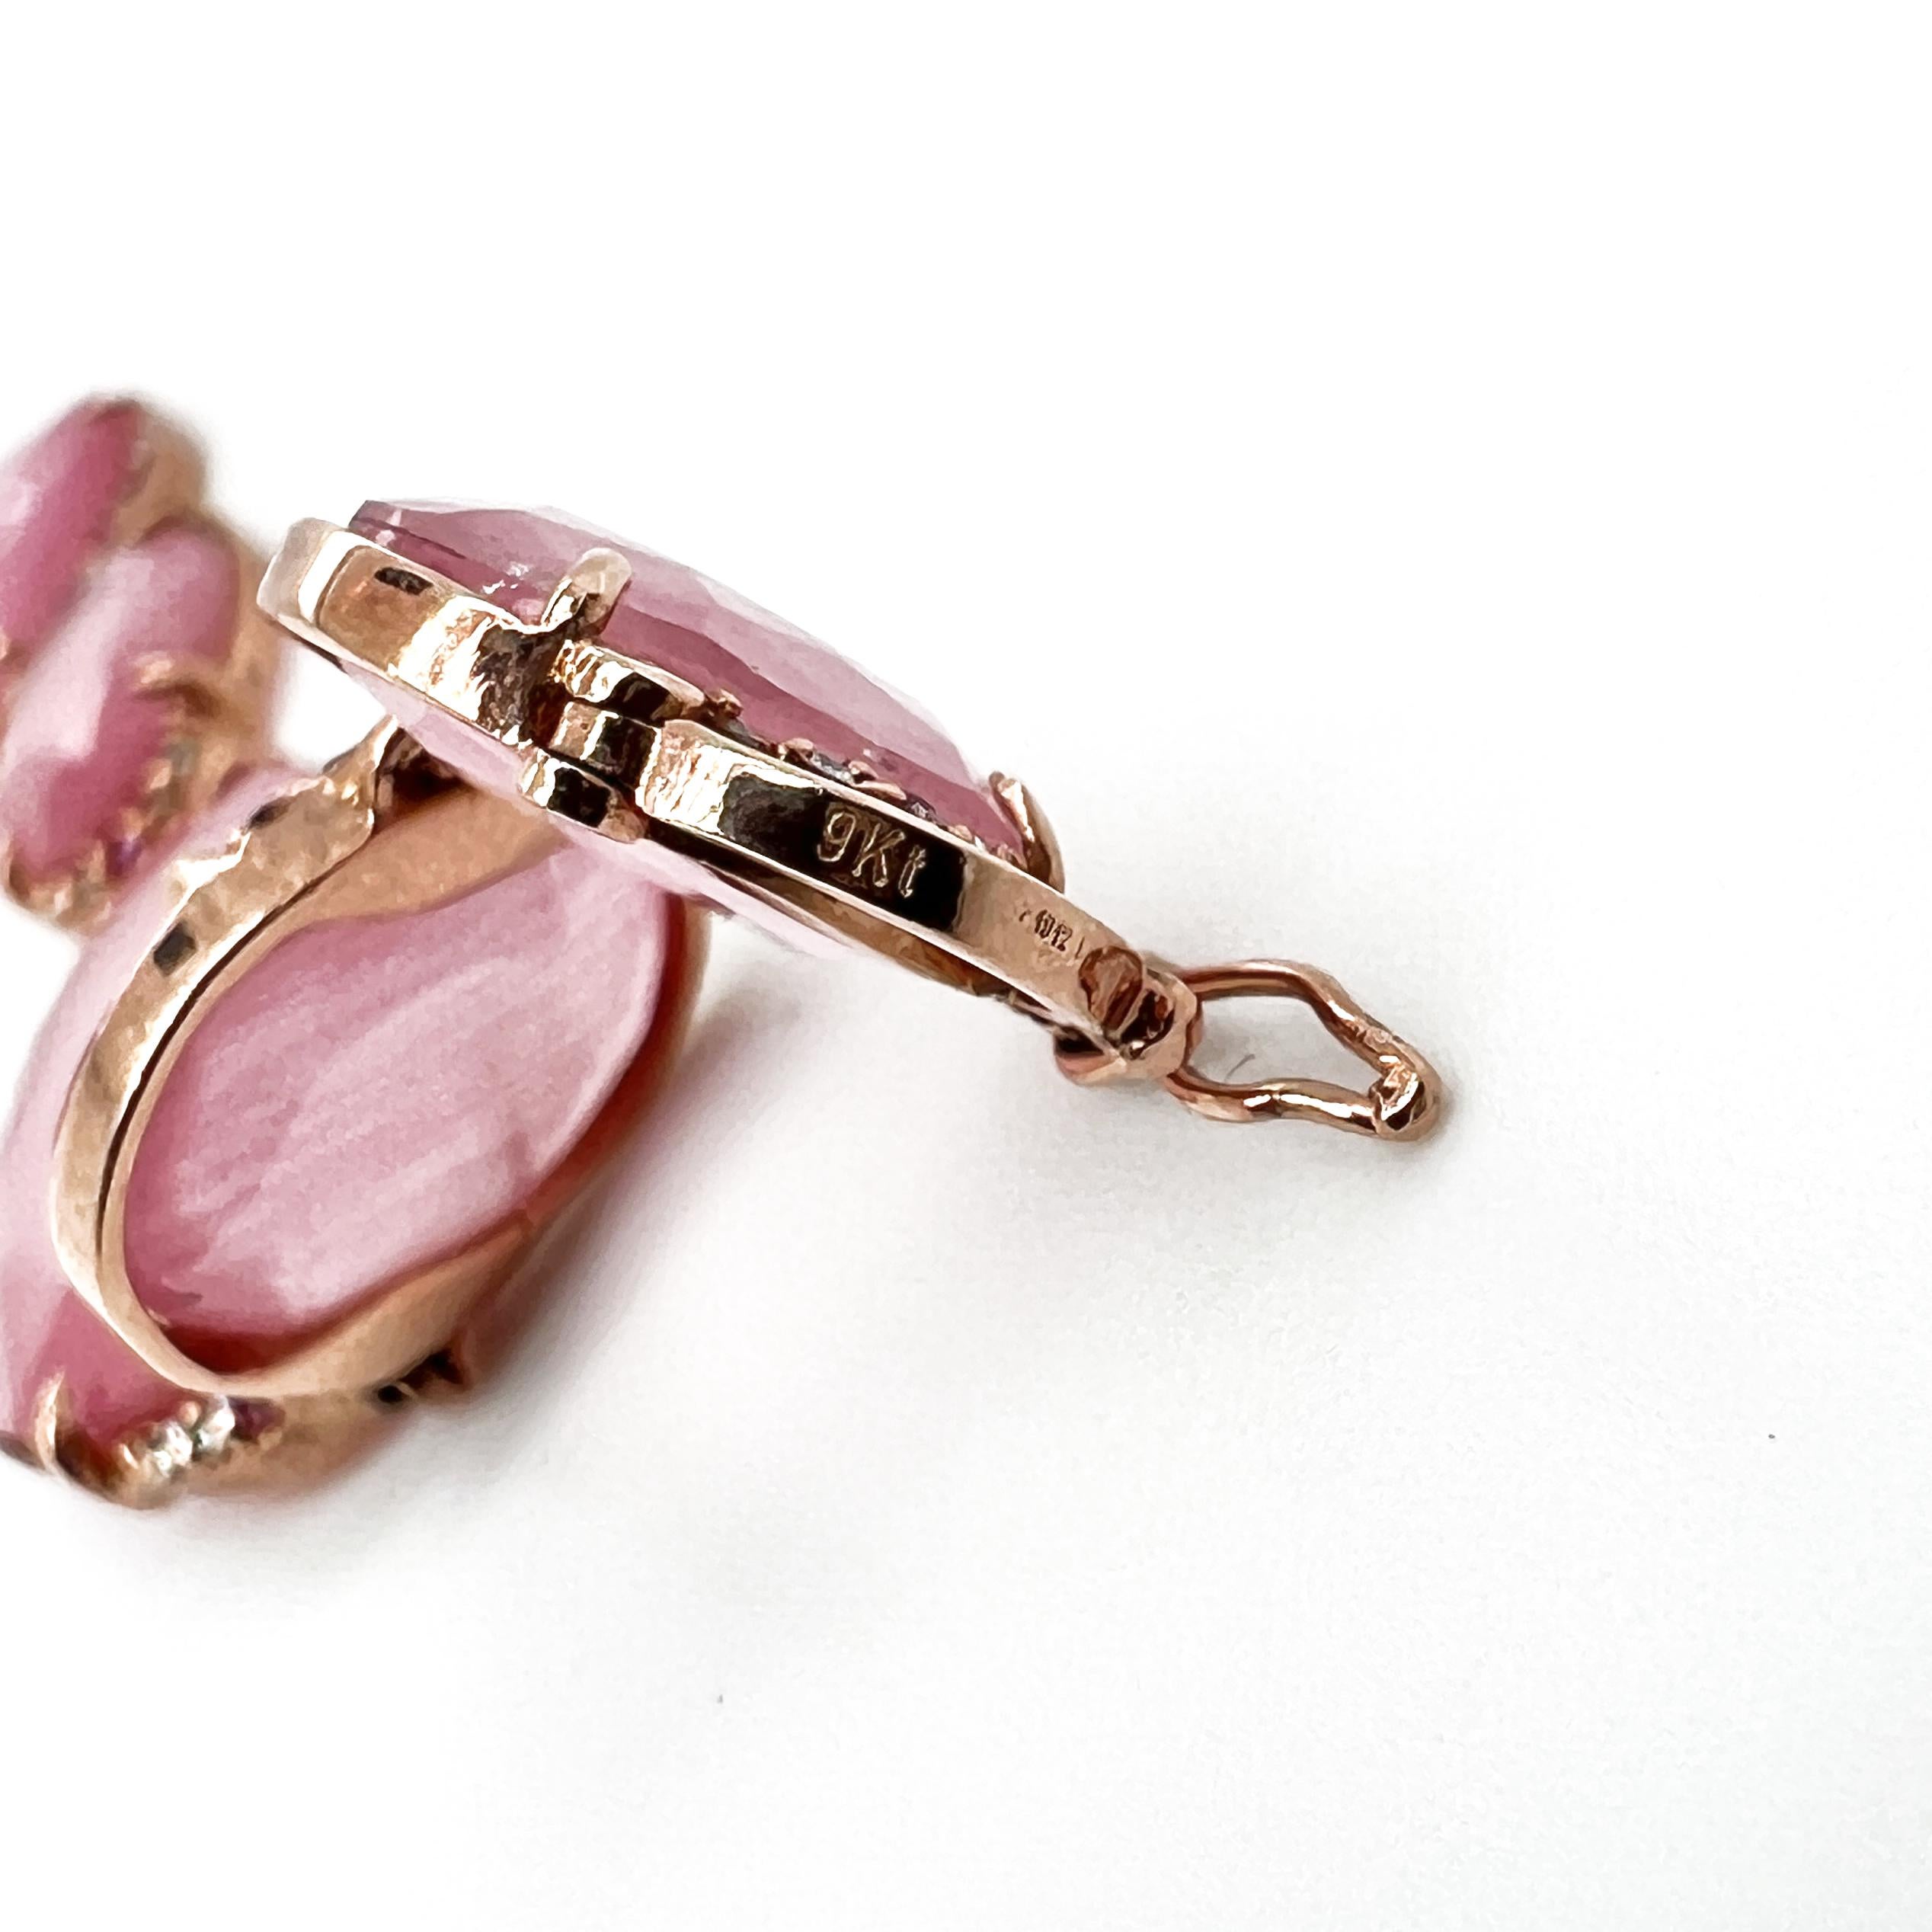 Brilliant Cut 9k gold Bracelet in doublets (rock crystal & fiber) in pink sapphires & diamonds For Sale